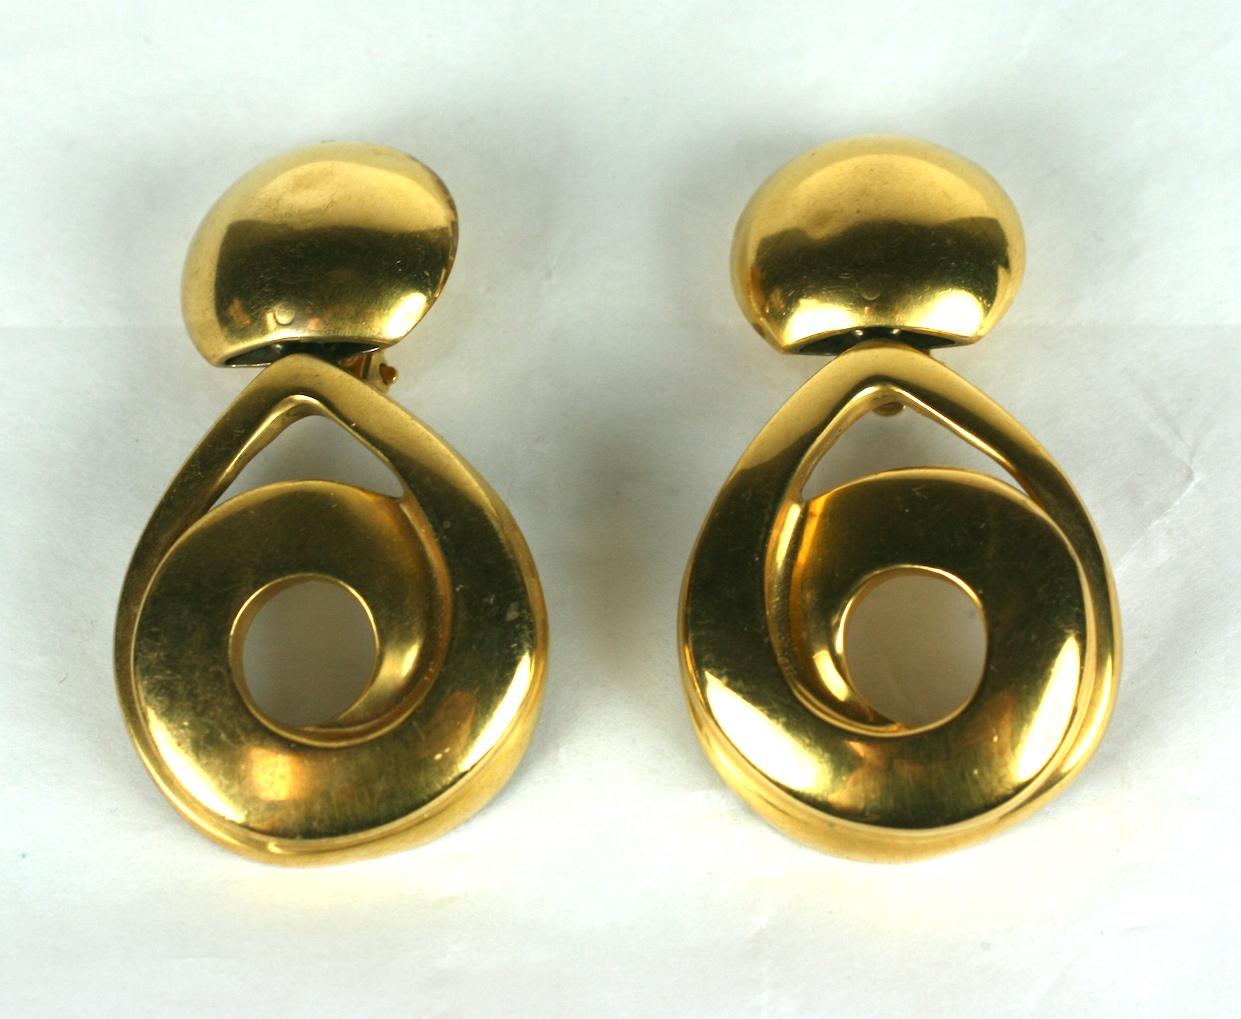 vaubel earrings